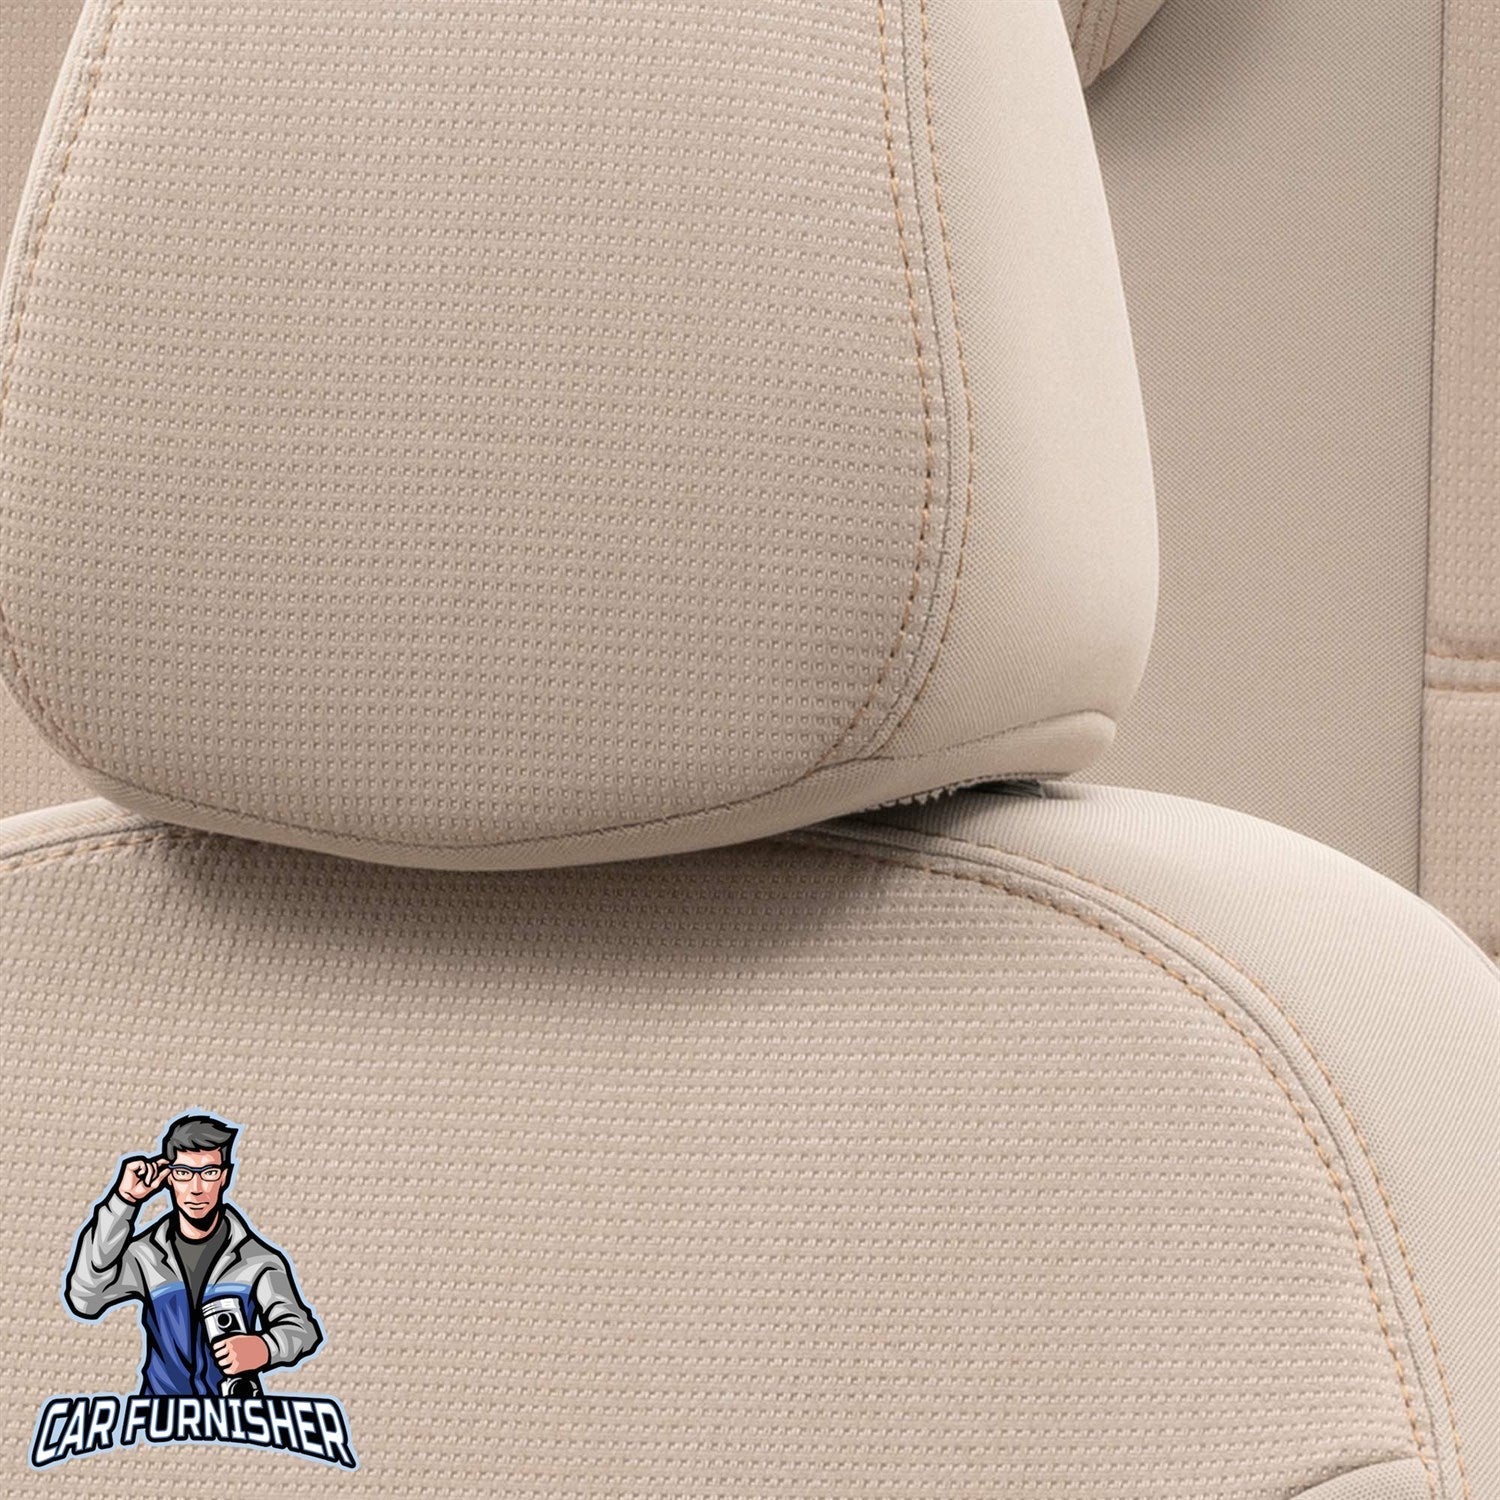 Peugeot 307 Seat Covers Original Jacquard Design Beige Jacquard Fabric